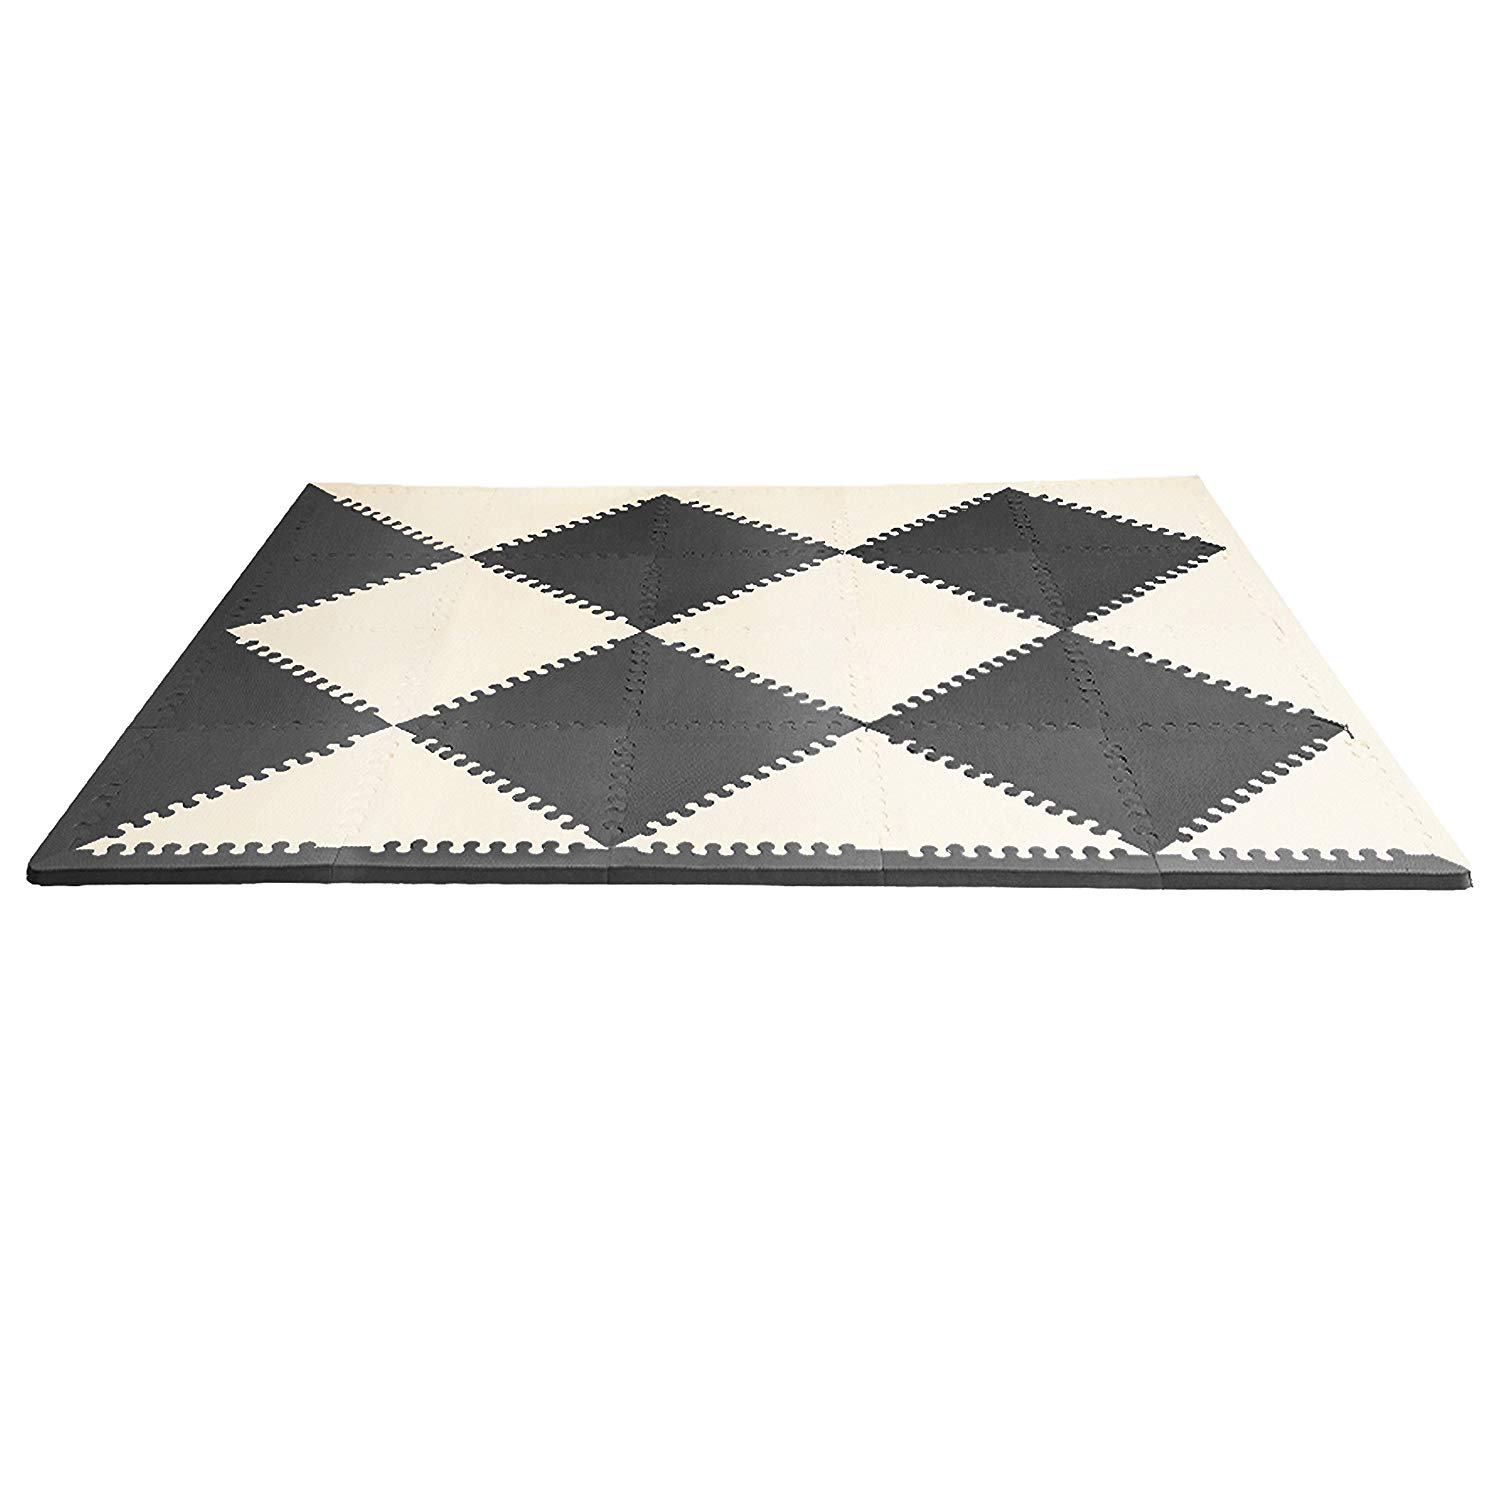 Skip Hop Geo Playspots Foam Tiles Play Mat in Cream and Black